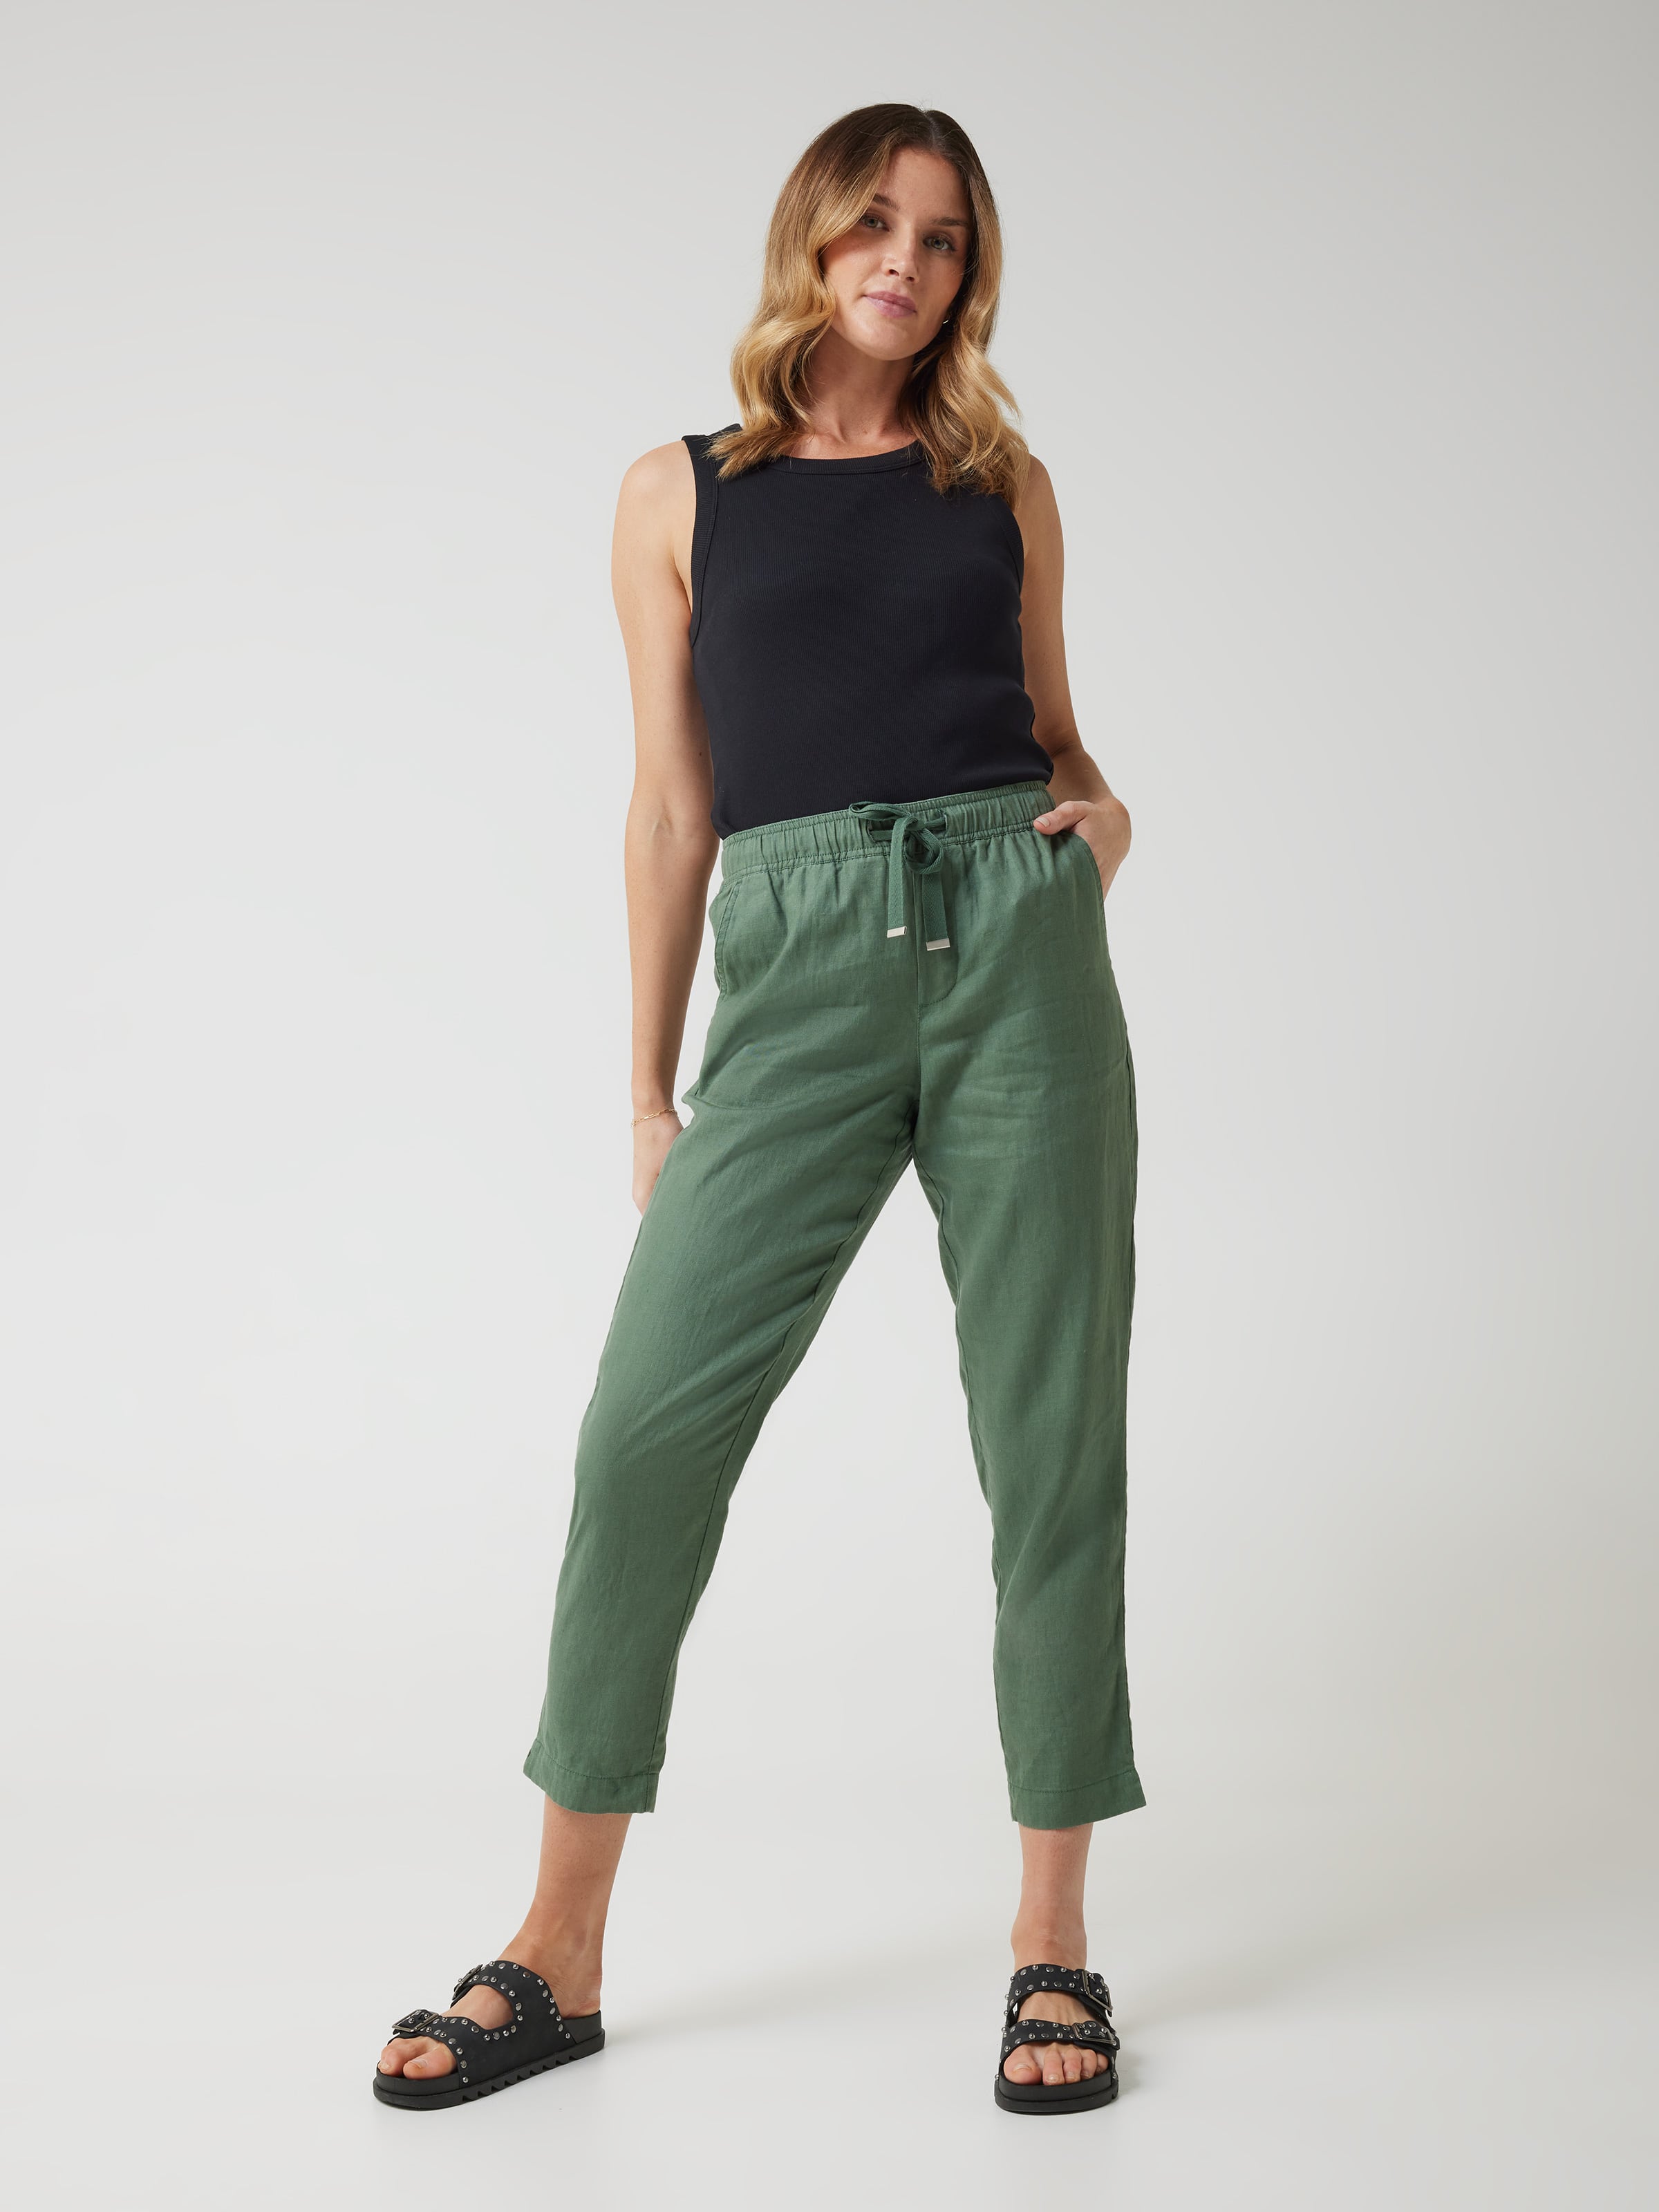 Women's Pants - Linen, Satin, Denim & More